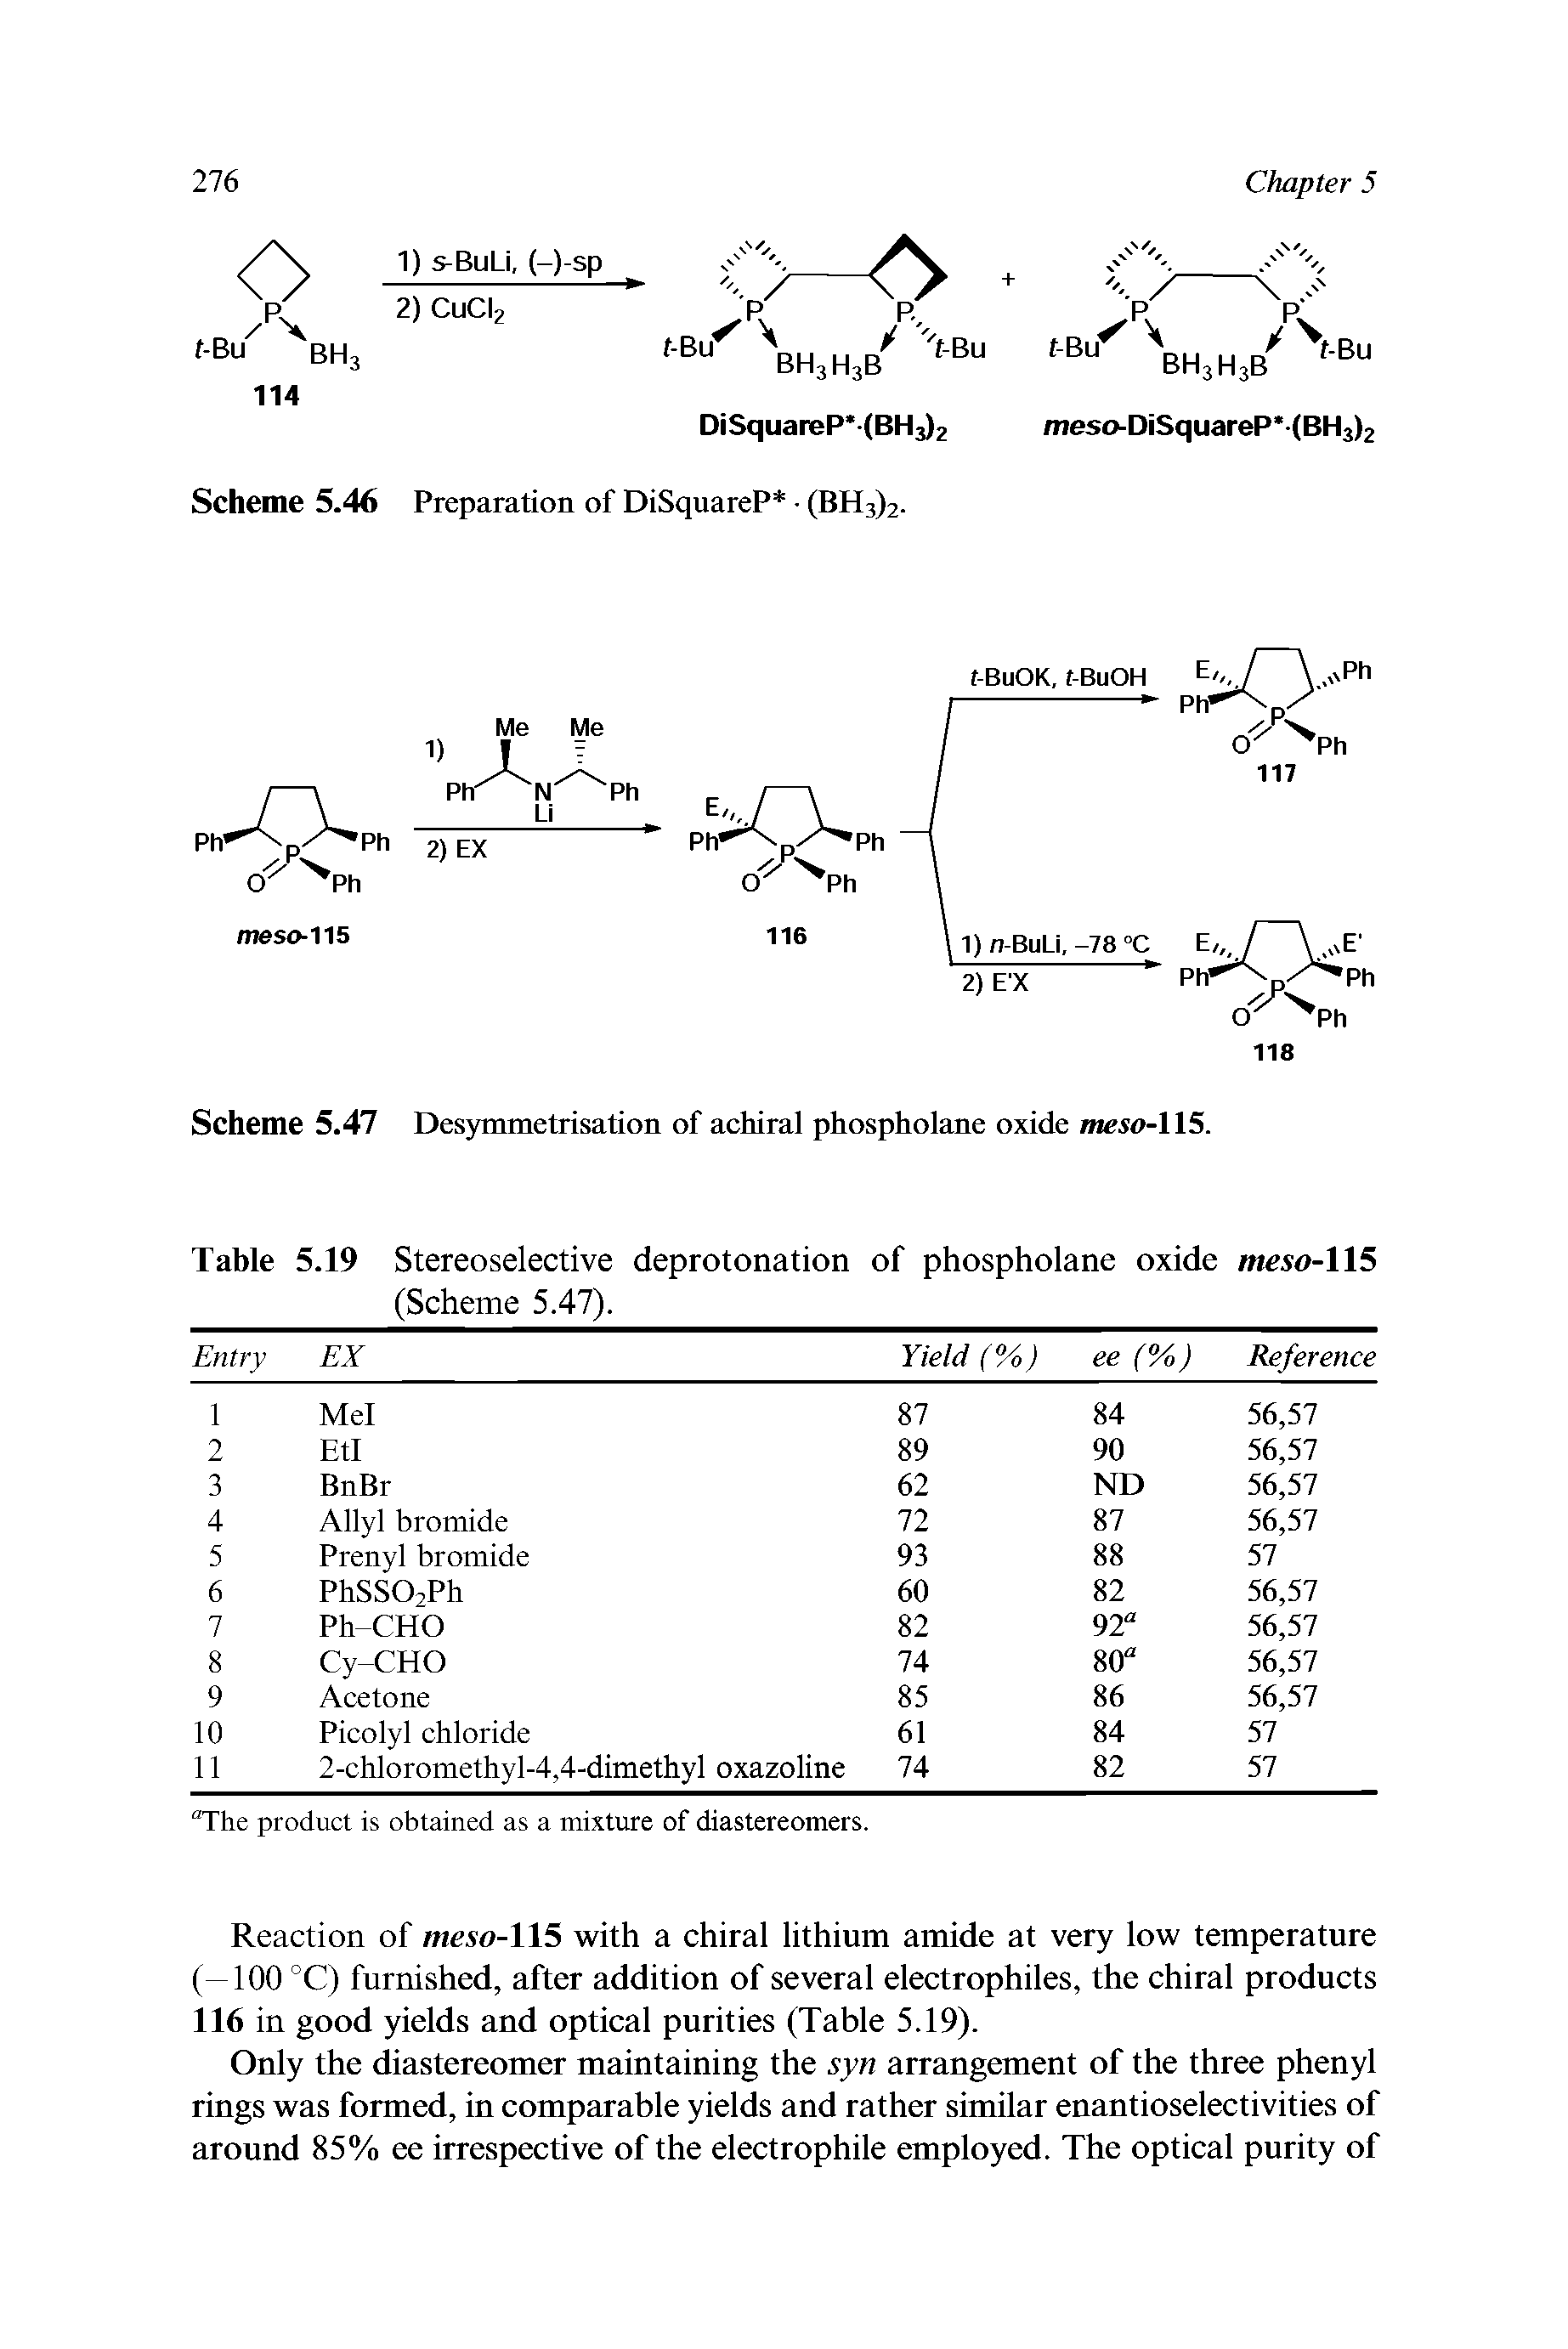 Table 5.19 Stereoselective deprotonation of phospholane oxide meso- 5 (Scheme 5.47).